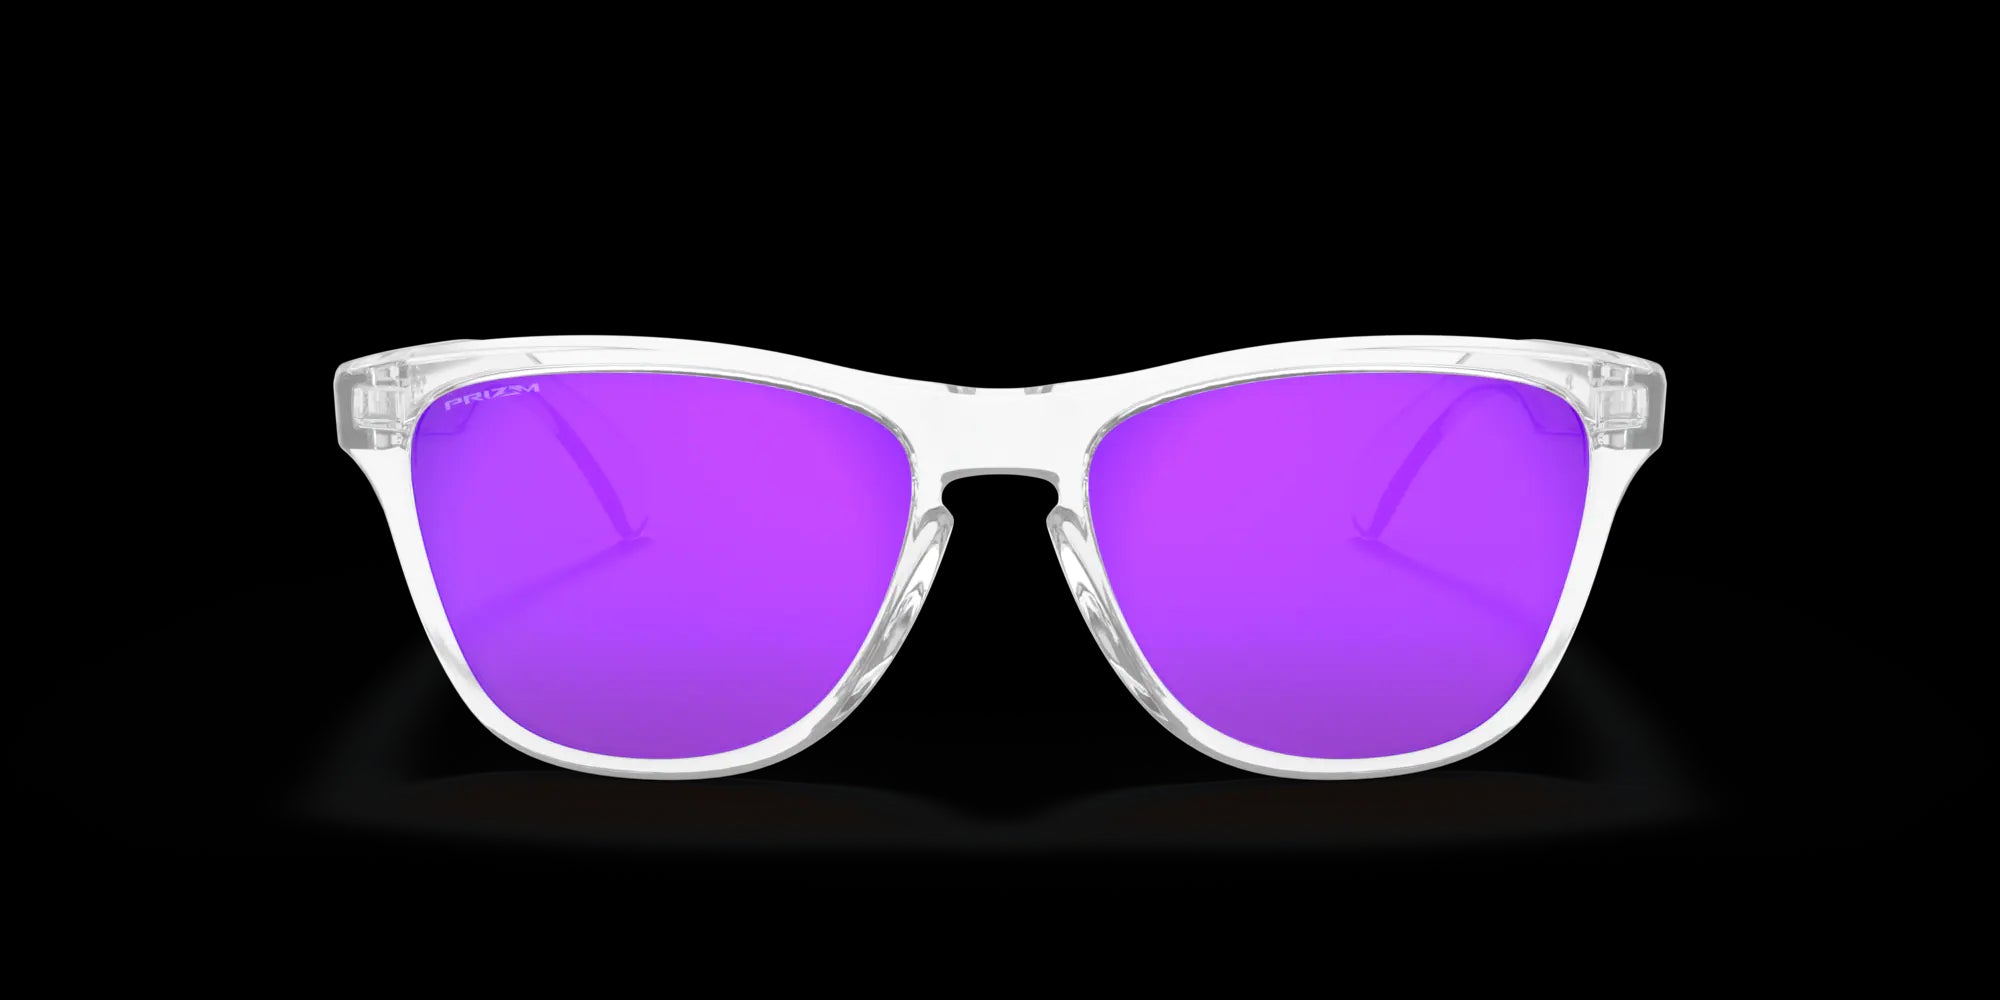 Clear/purpleFrogskins XS (Youth Fit)